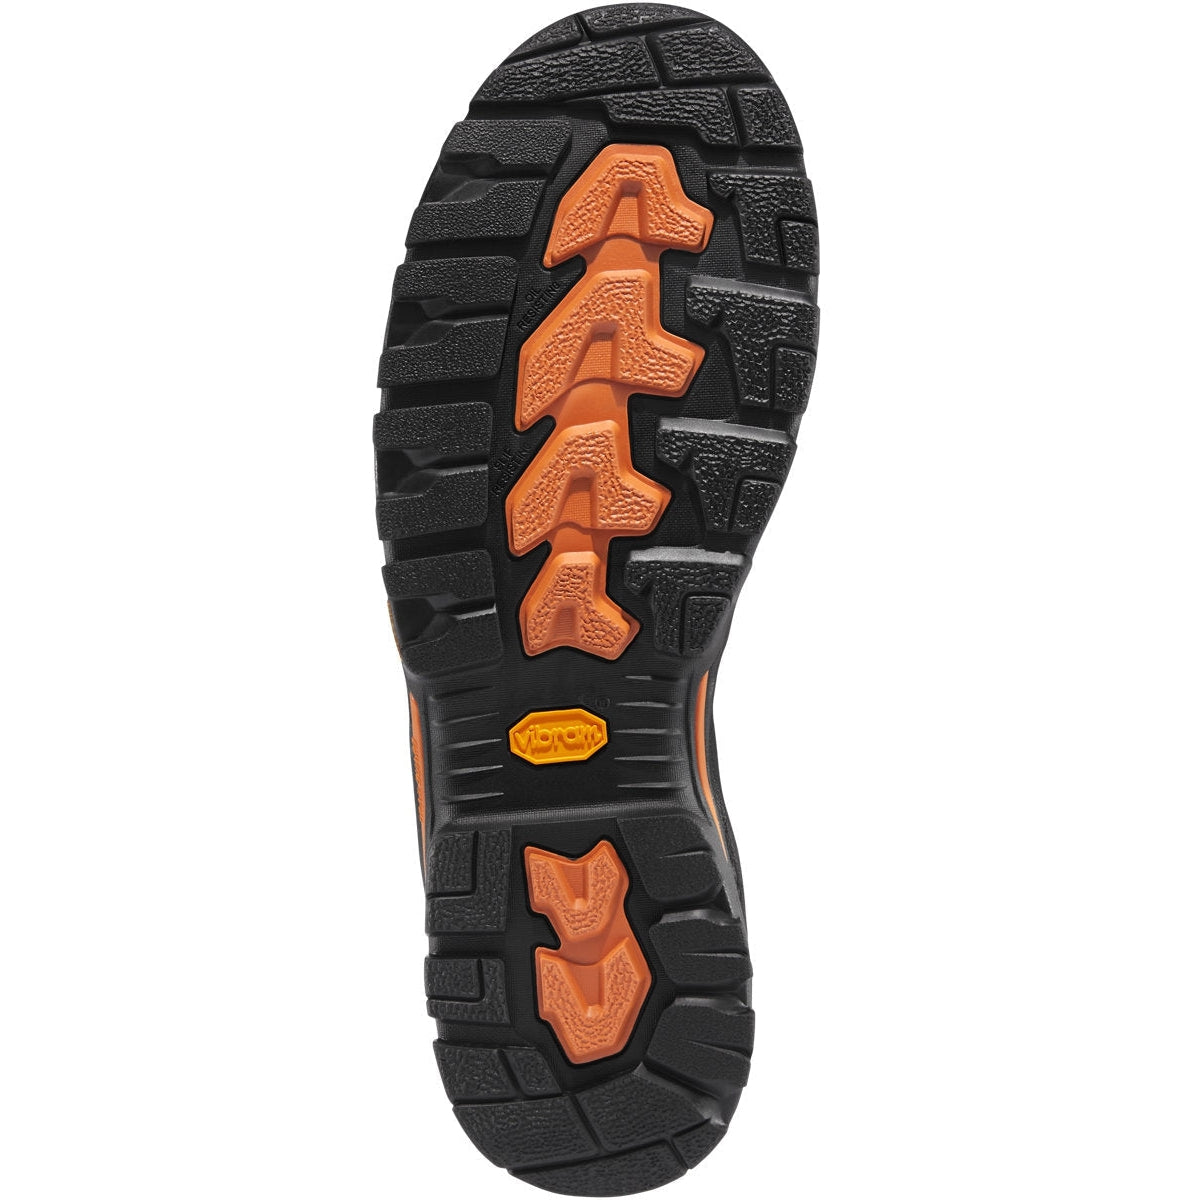 Danner Men's Vicious 6" Safety Toe WP Slip Resist Work Boot -Brown- 13880  - Overlook Boots